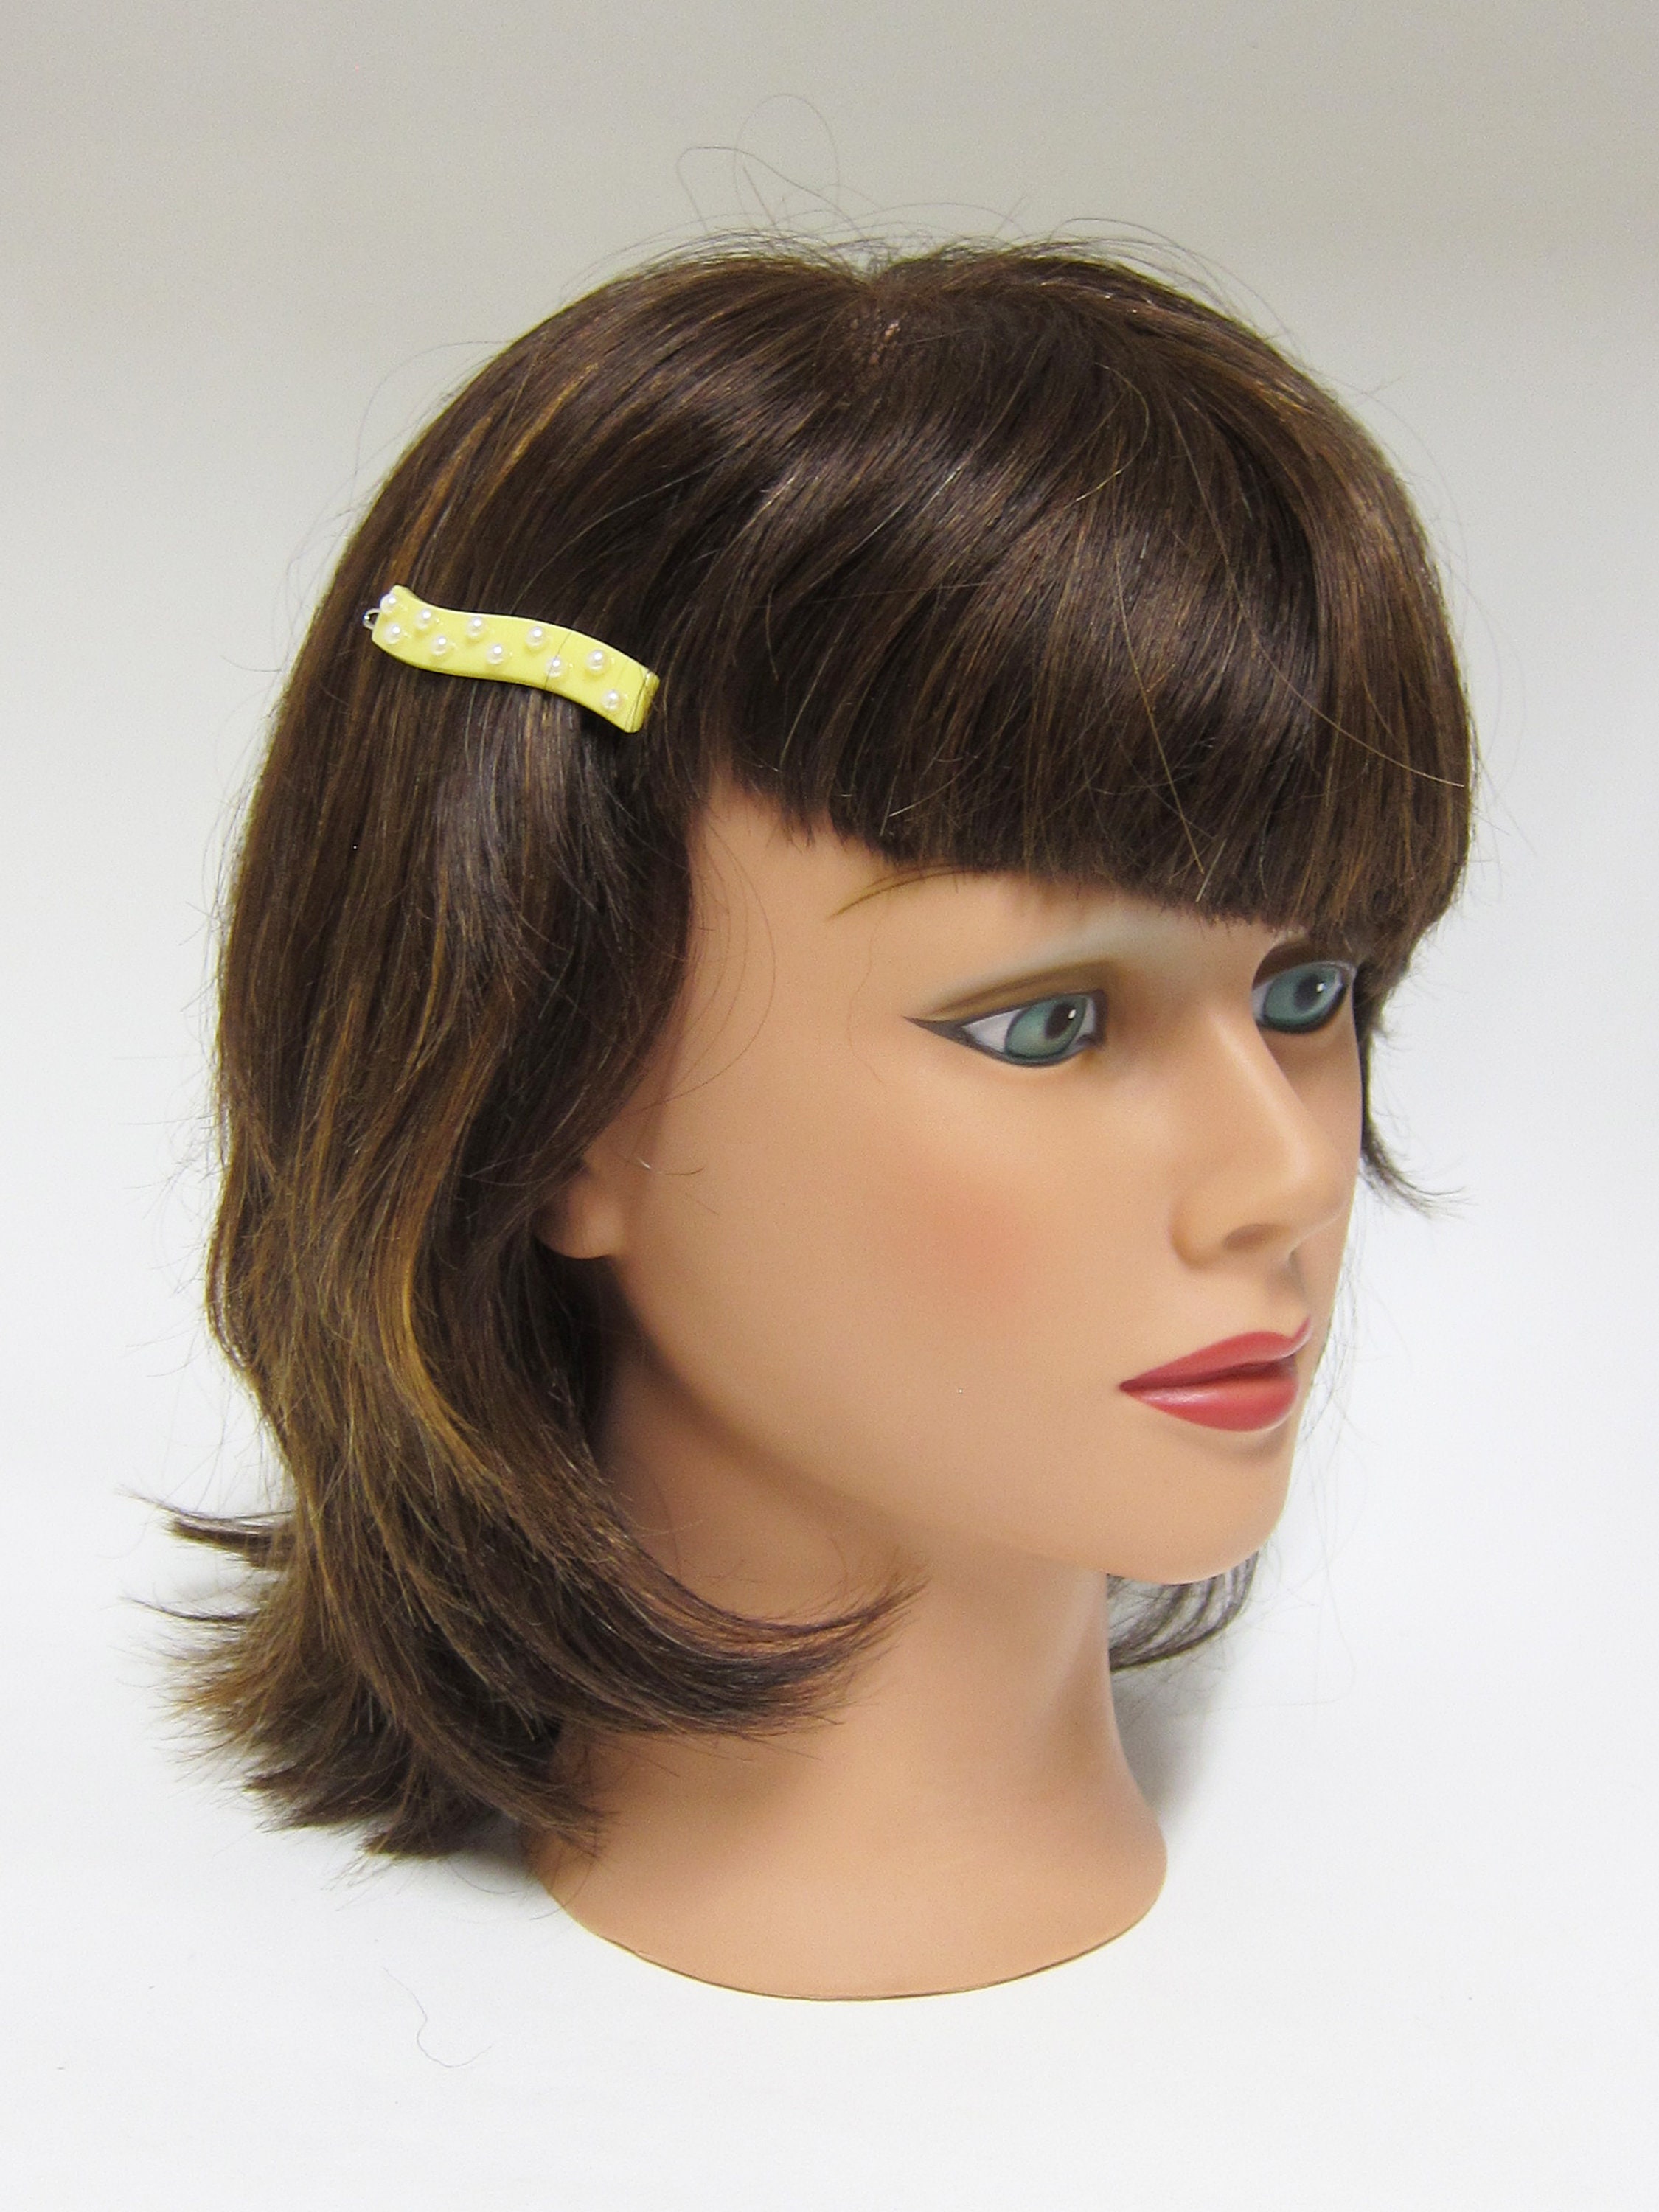 1980's vintage hair clip PAIR 2.1 yellow plastic | Etsy